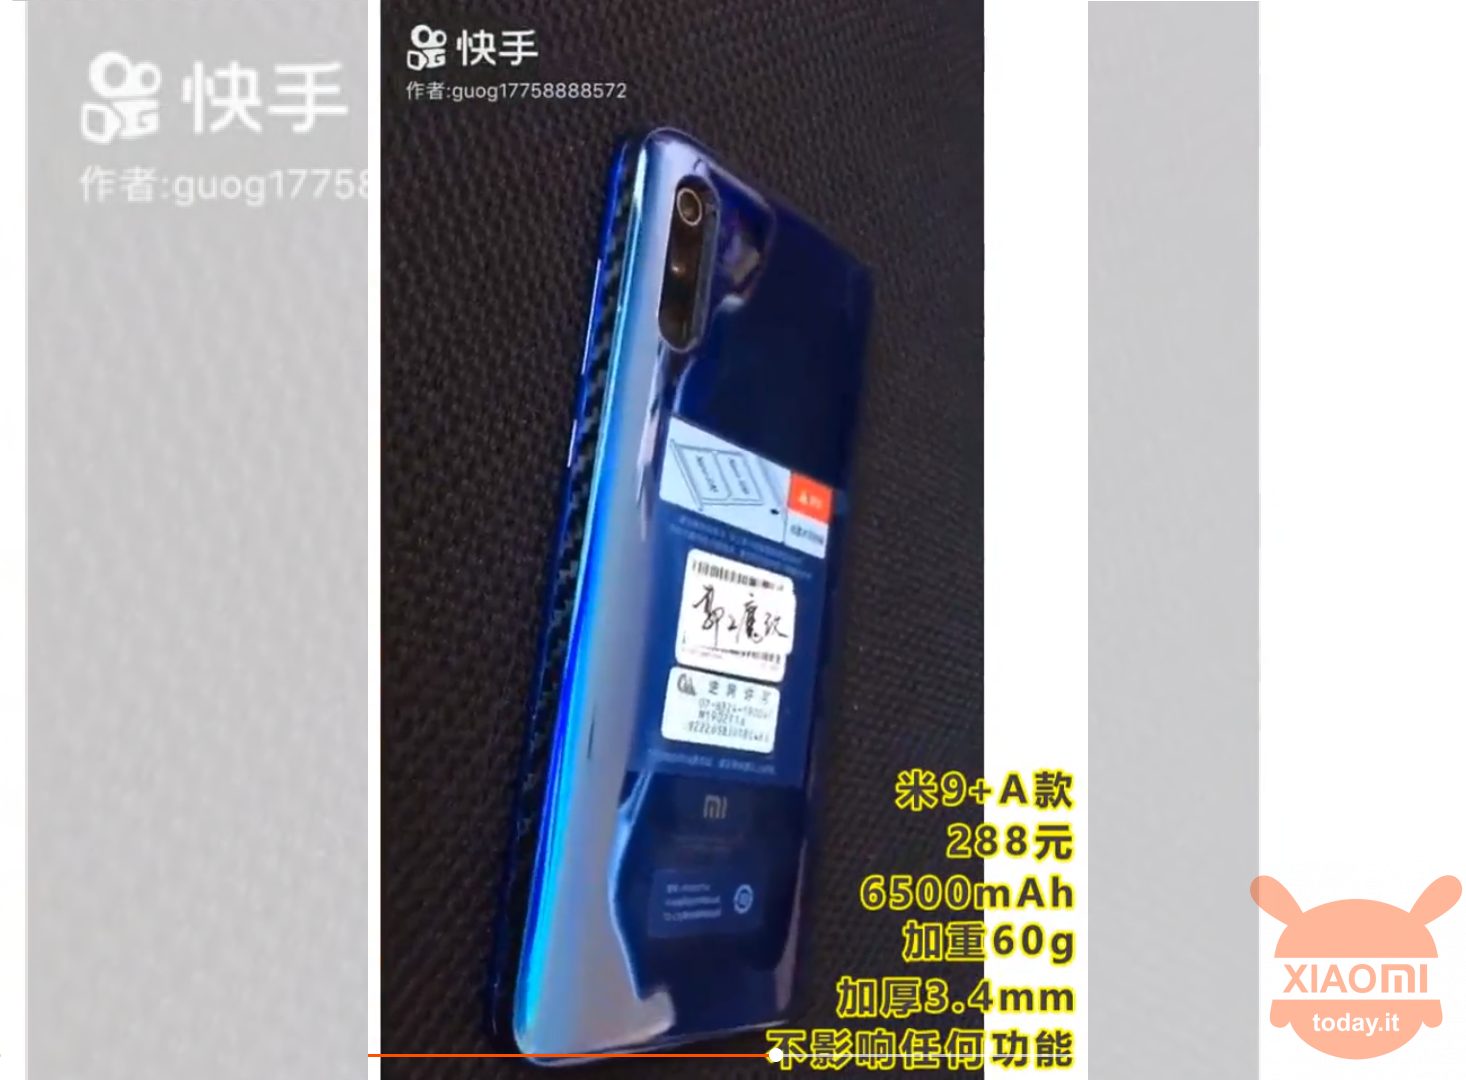 Pin Xiaomi Mi 9 6500mAh